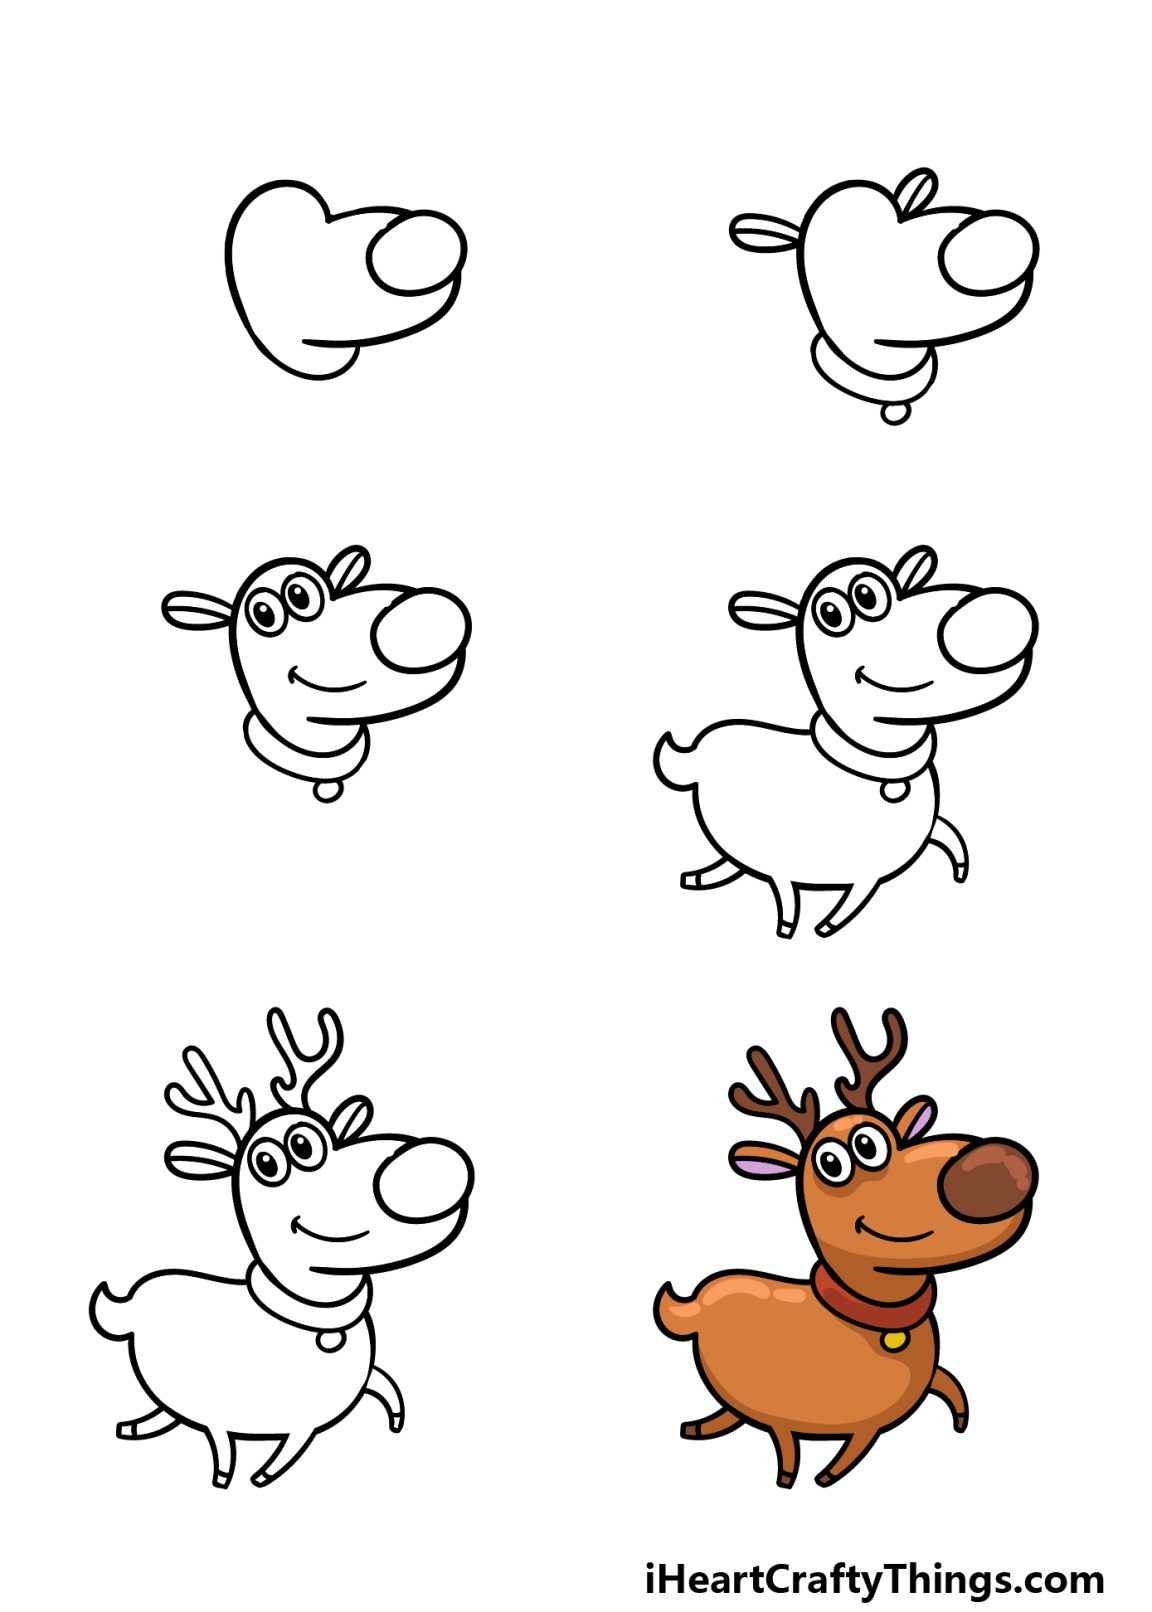 Cartoon Reindeer Drawing How To Draw A Cartoon Reindeer Step By Step